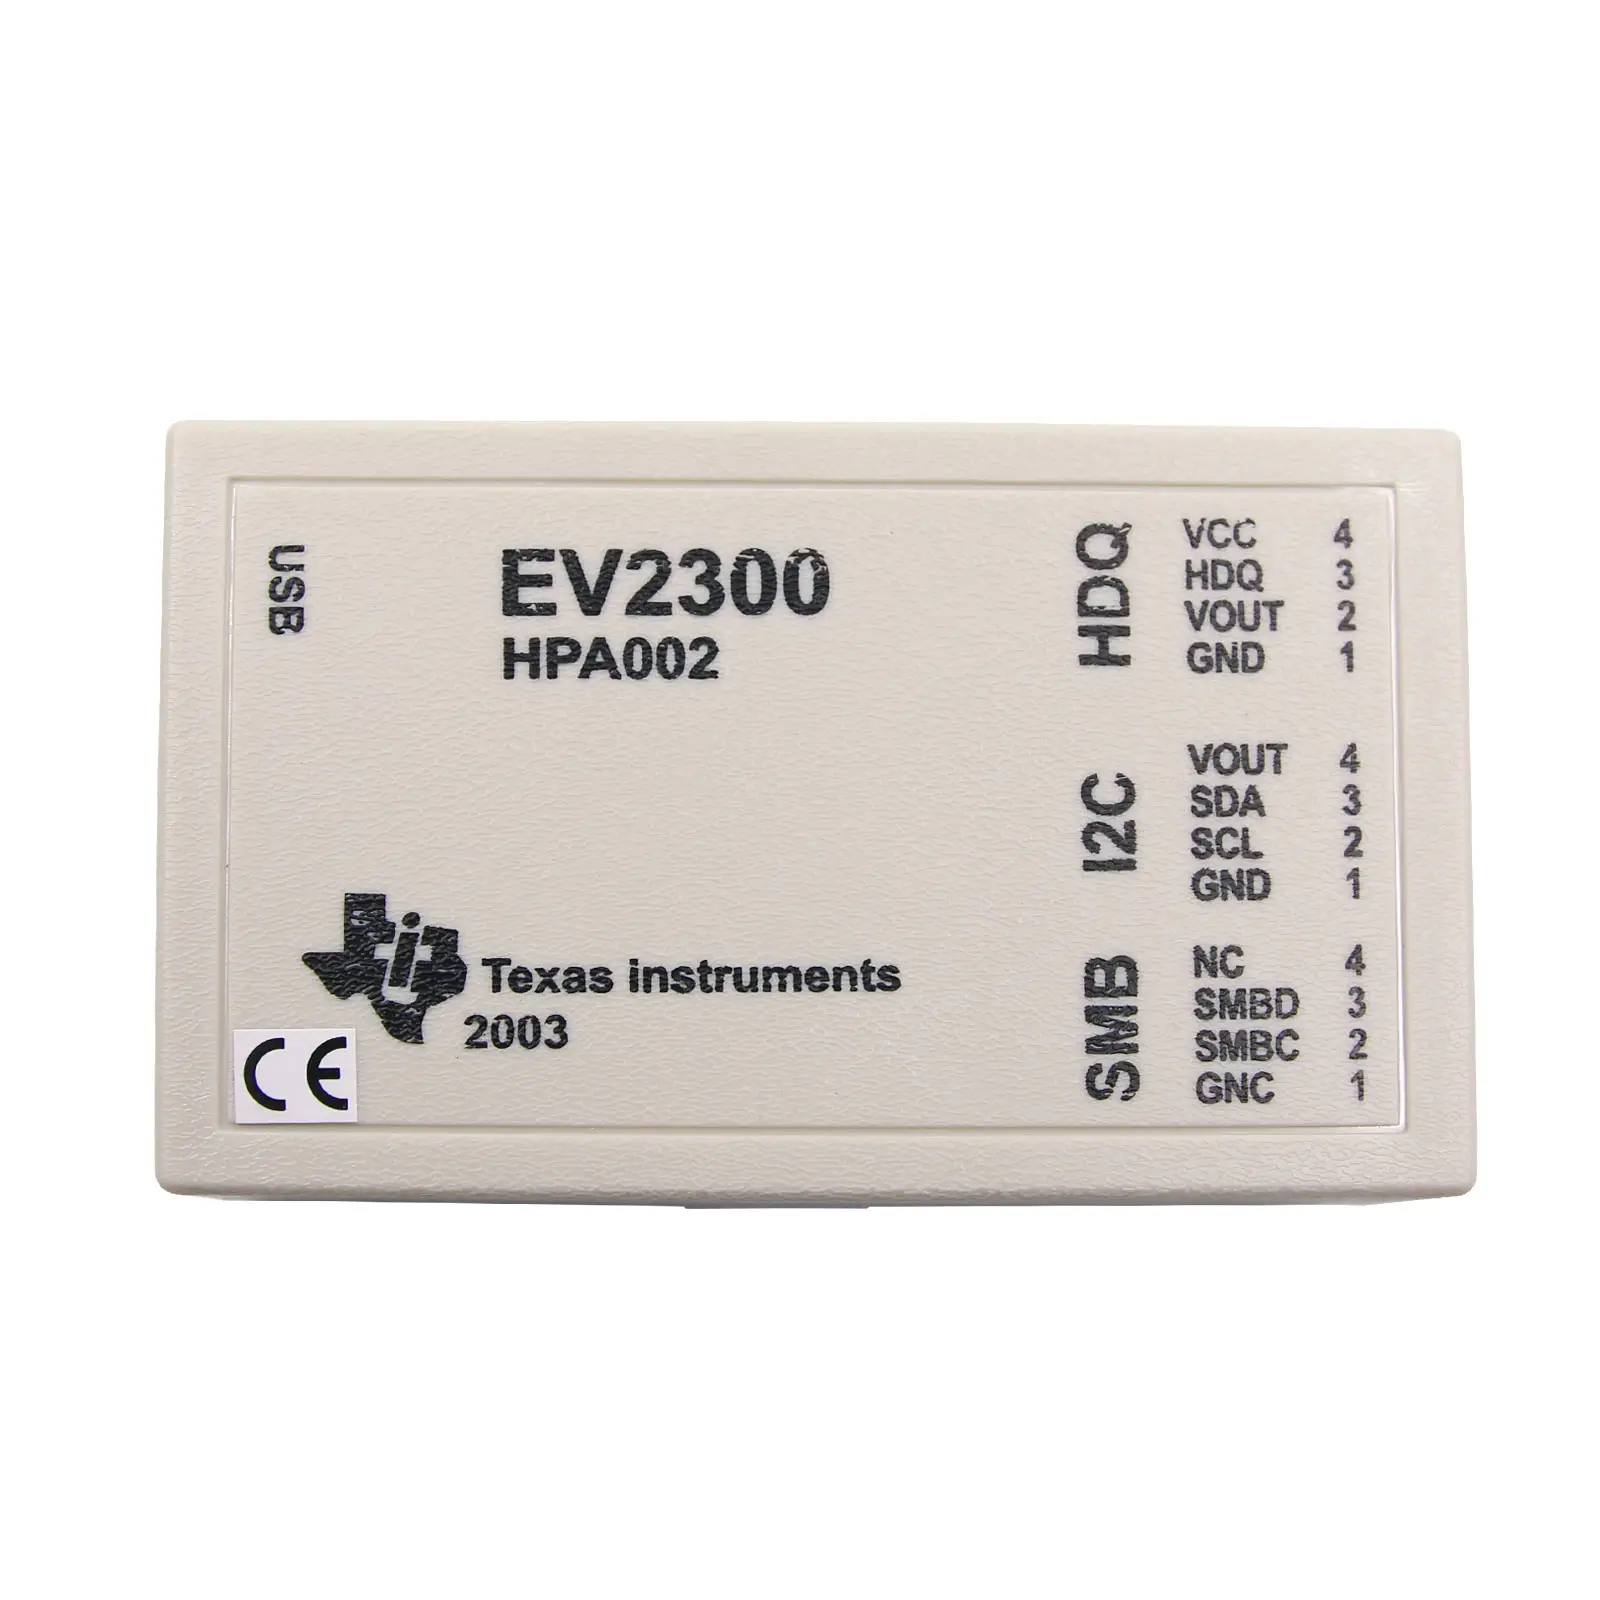 EV2300 PC Tester ปลดล็อกการบำรุงรักษาเครื่องมือตรวจจับแบตเตอรี่ Gauge วงจร USB Interface Board